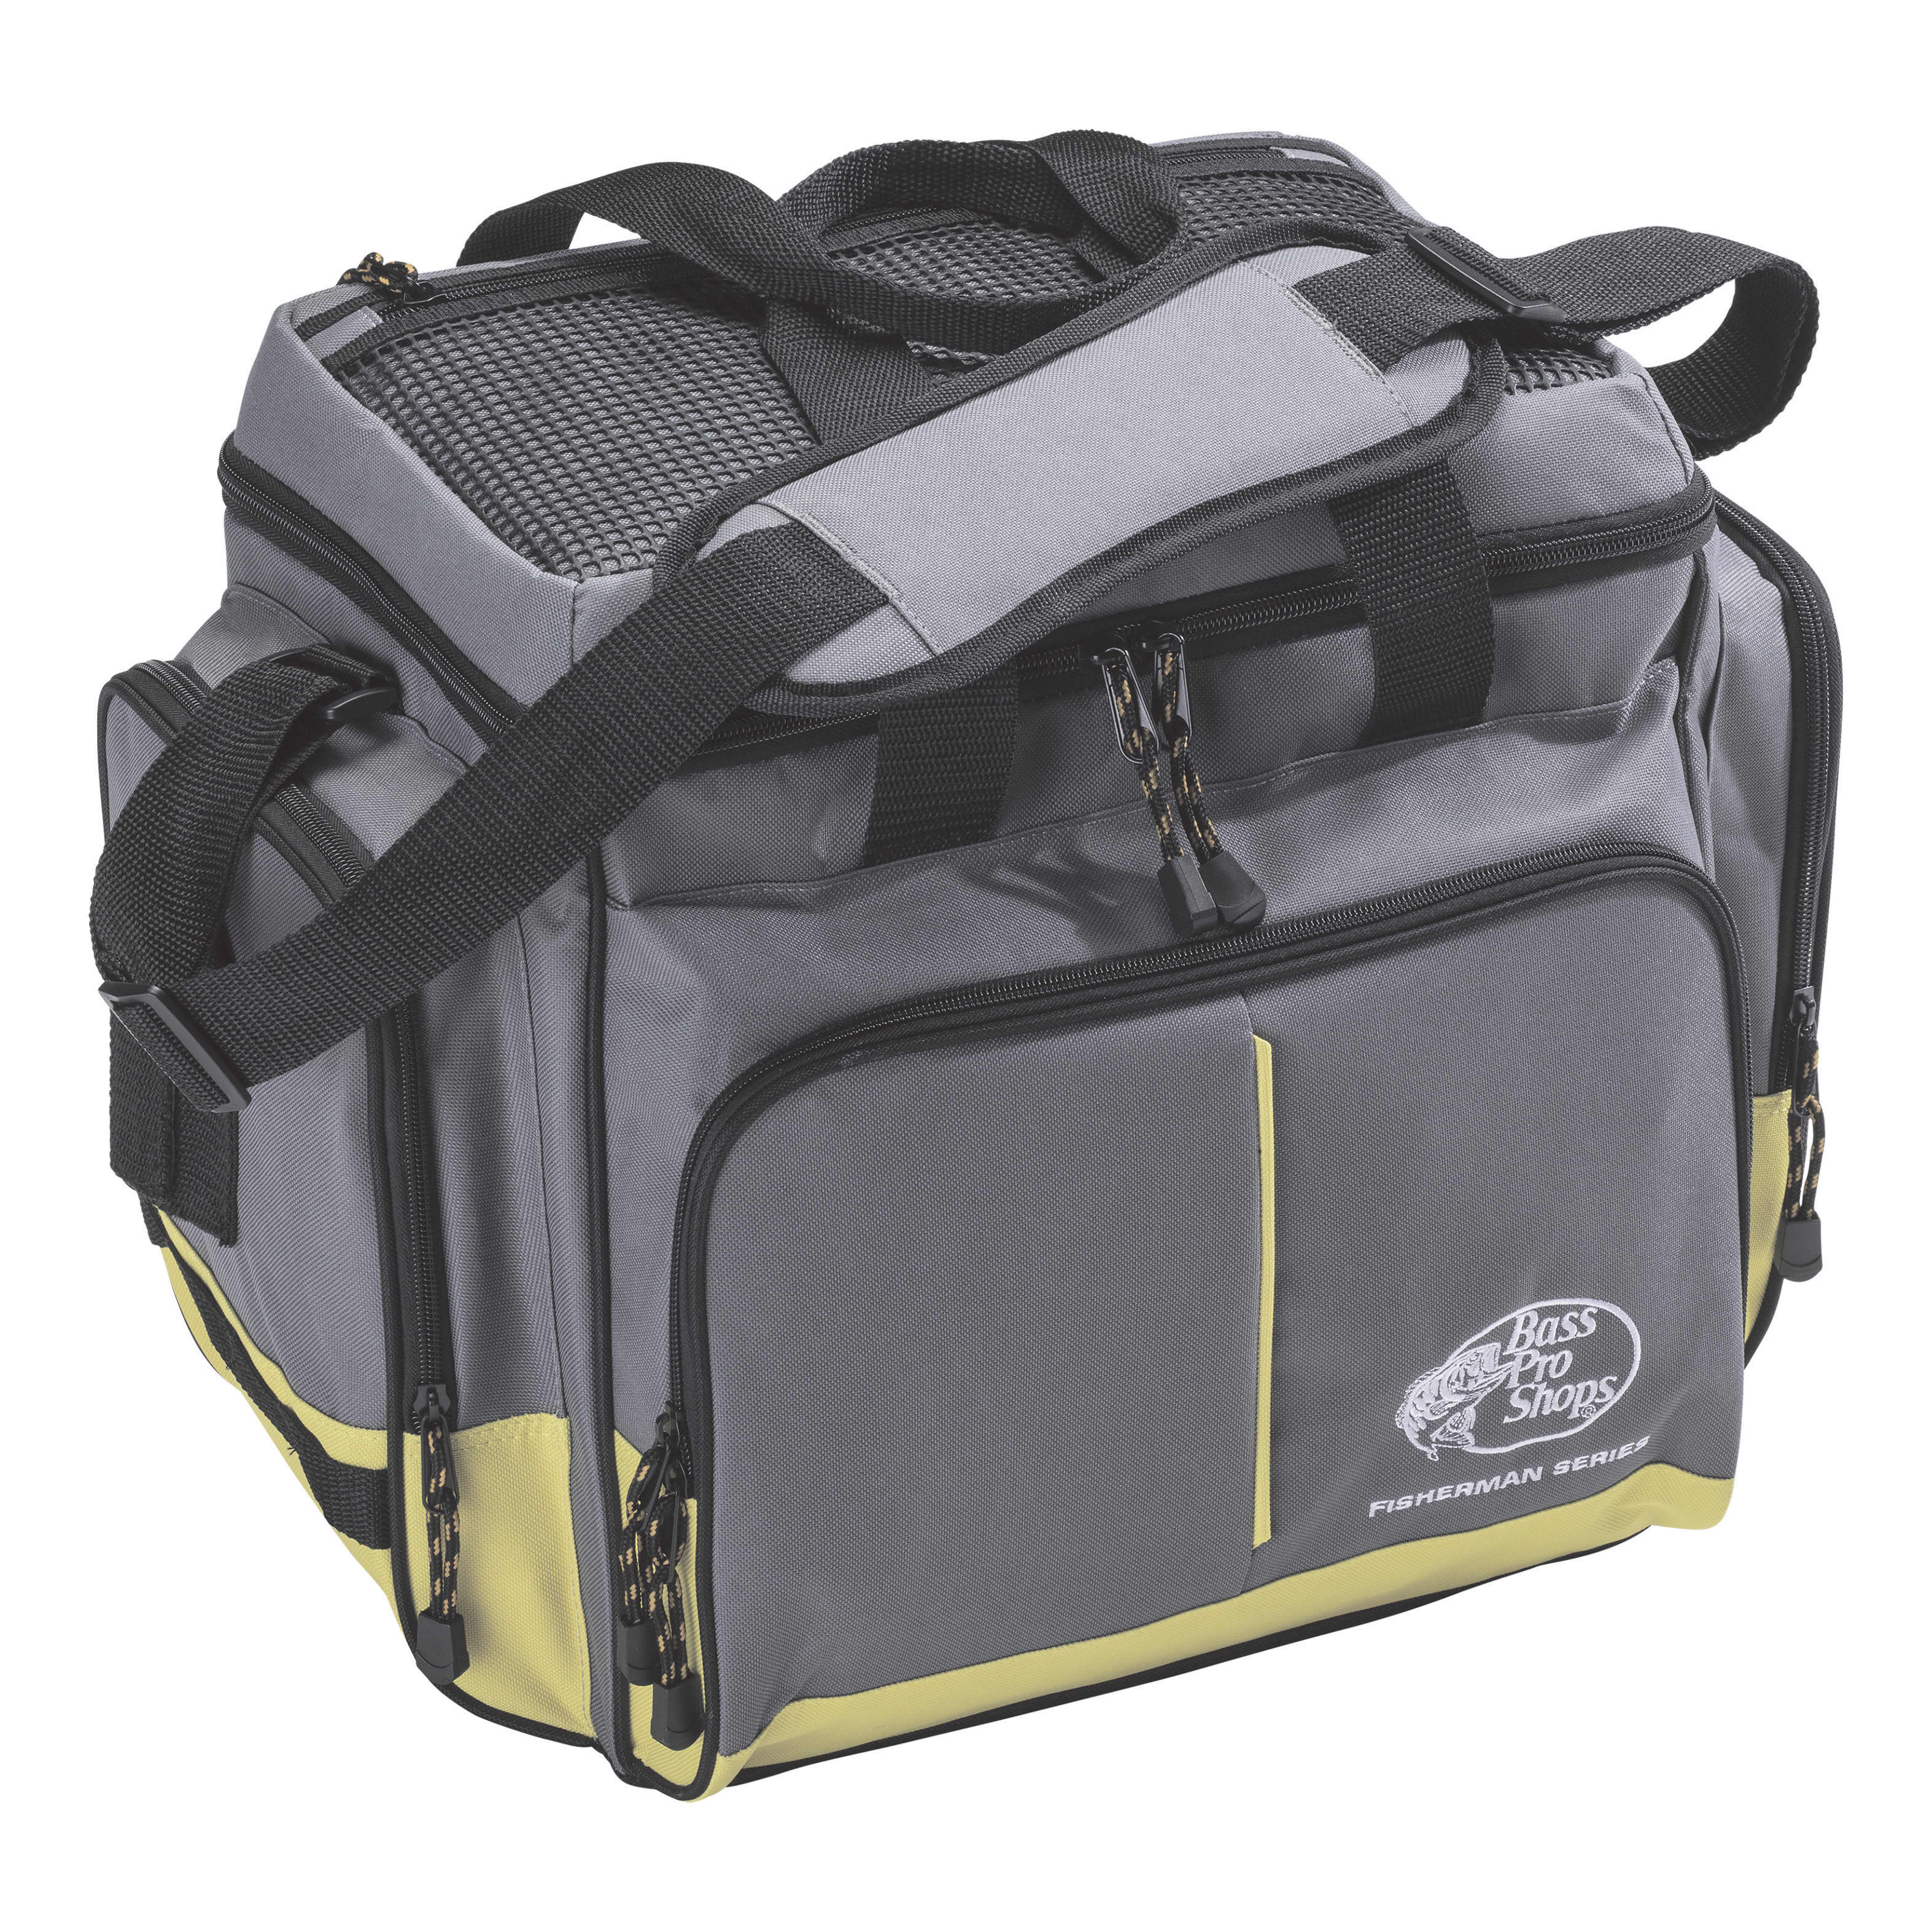 Bass Pro Shops Advanced Angler Pro Tackle Bags - Cabelas - BASS PRO